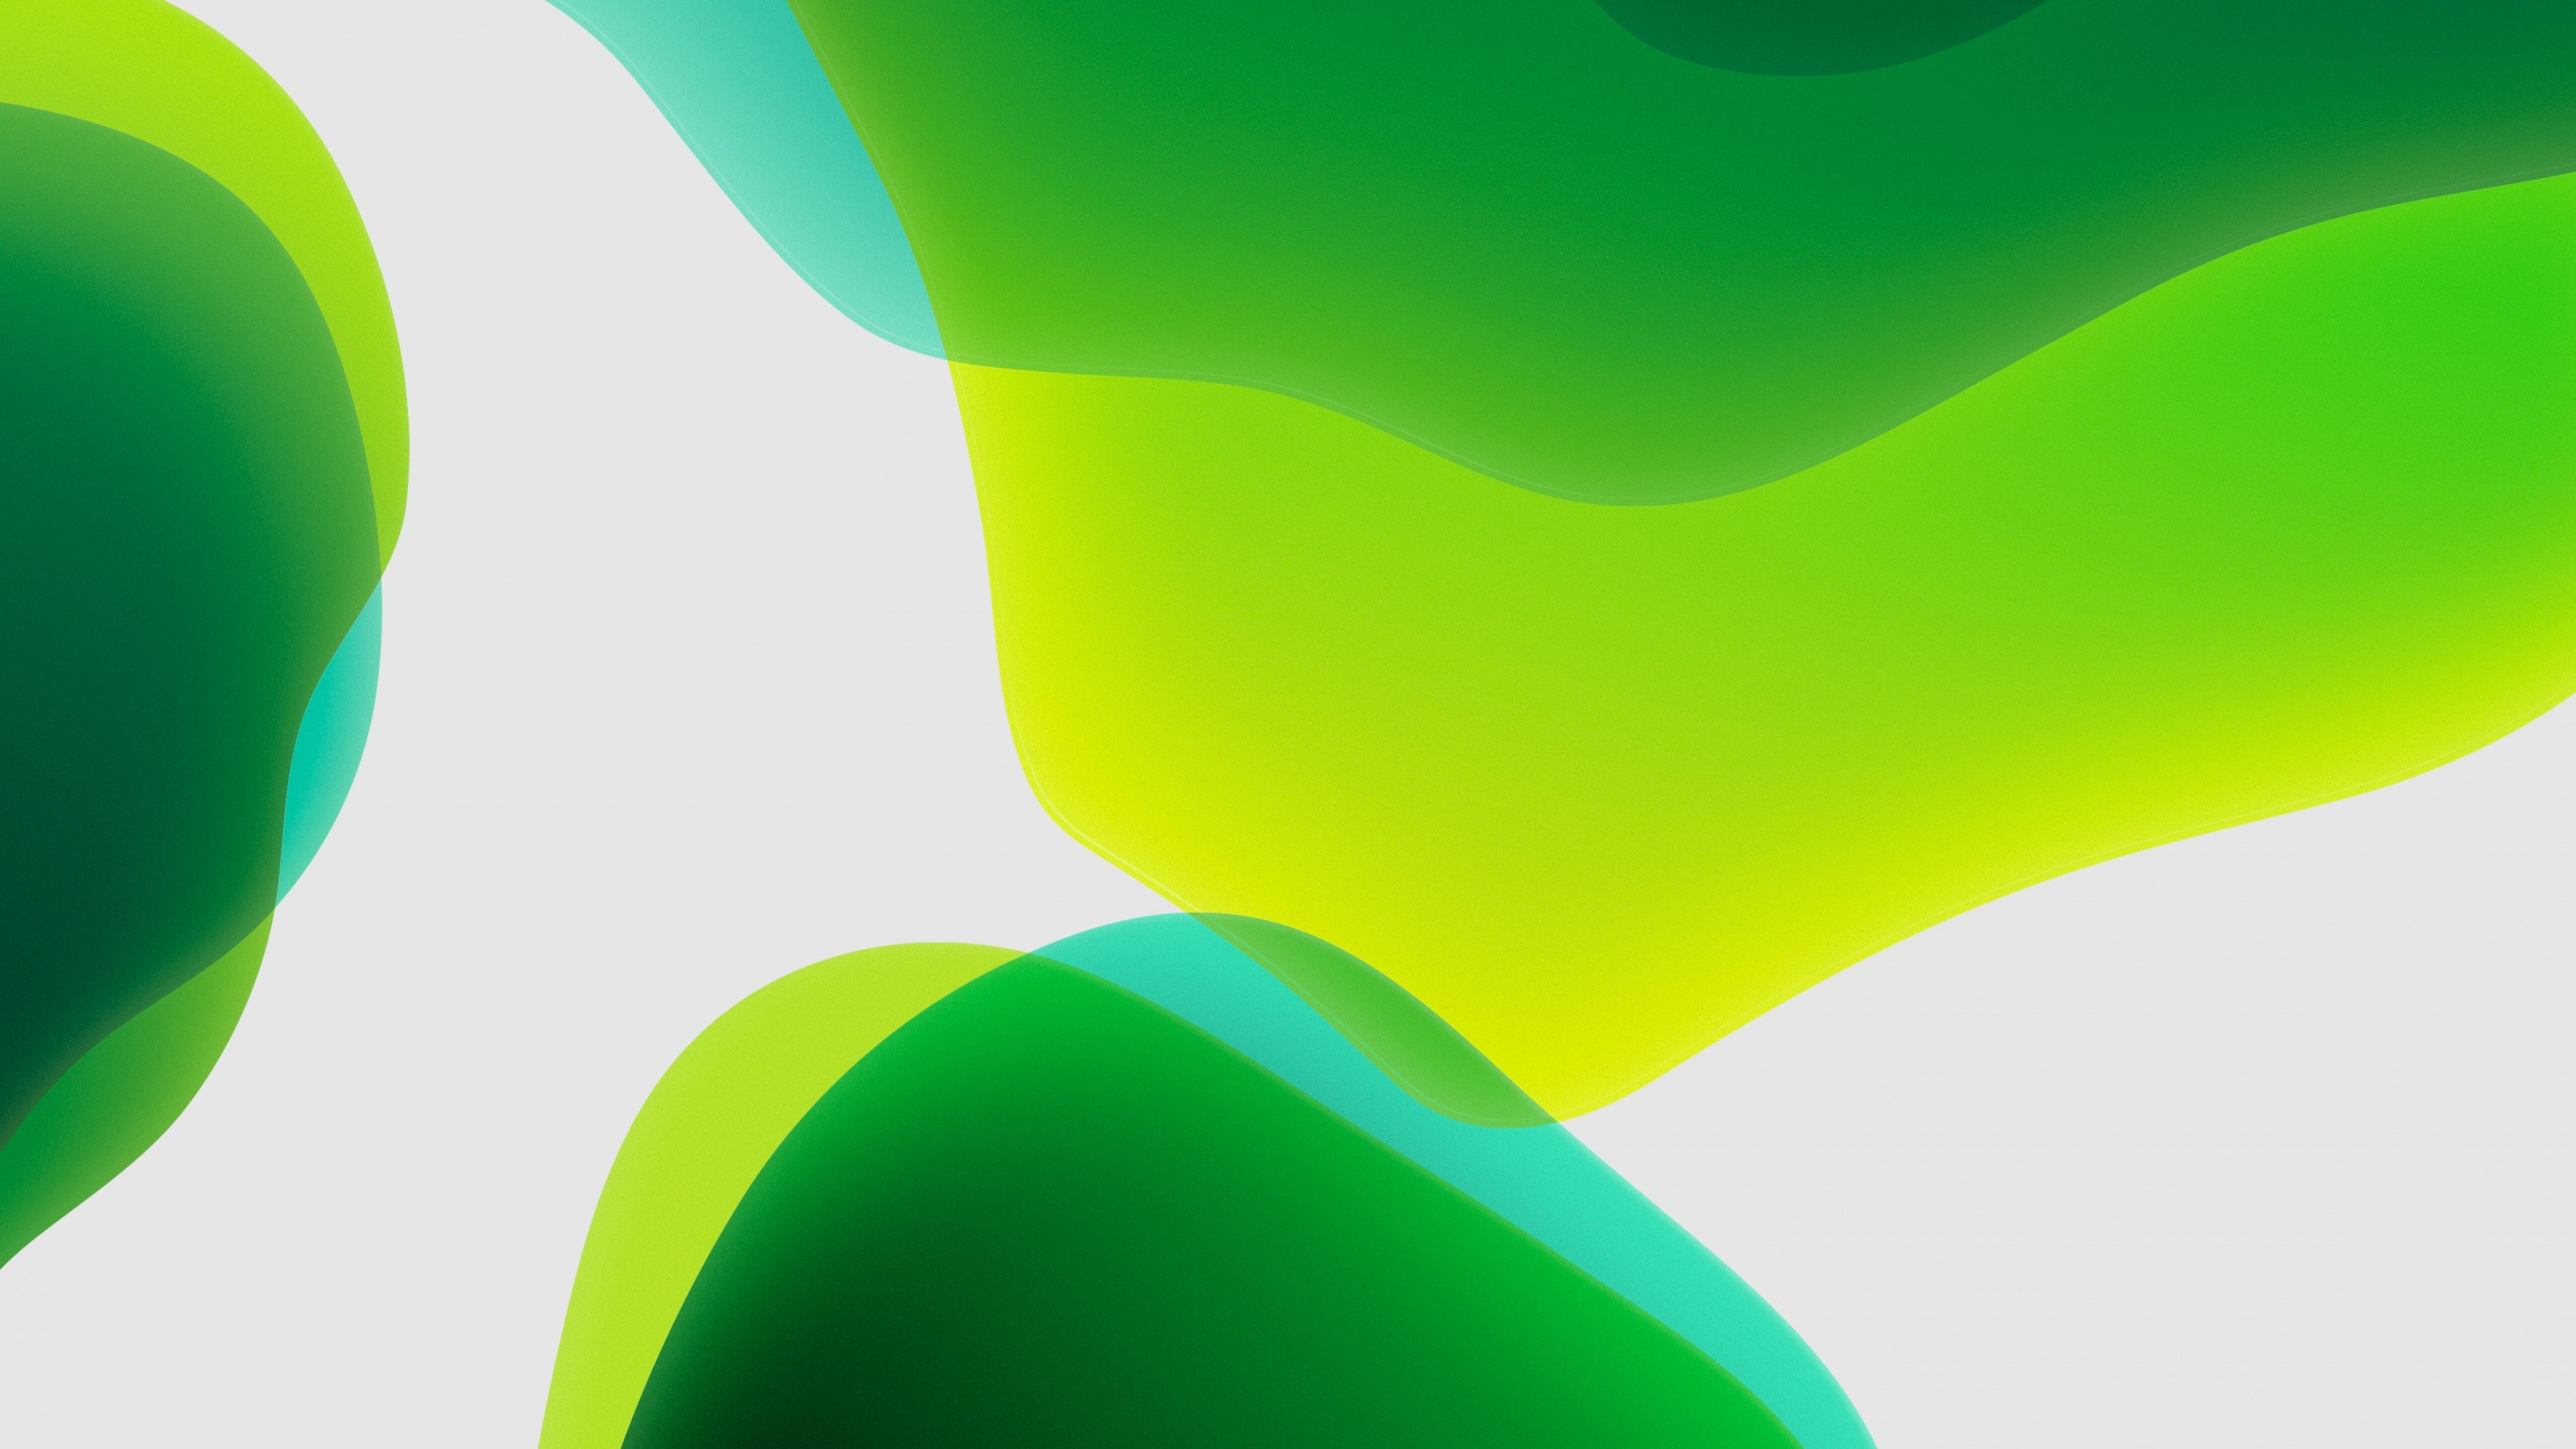 iPadOS Wallpaper 4K, Stock, Green, White background, iPad, iOS HD, Abstract